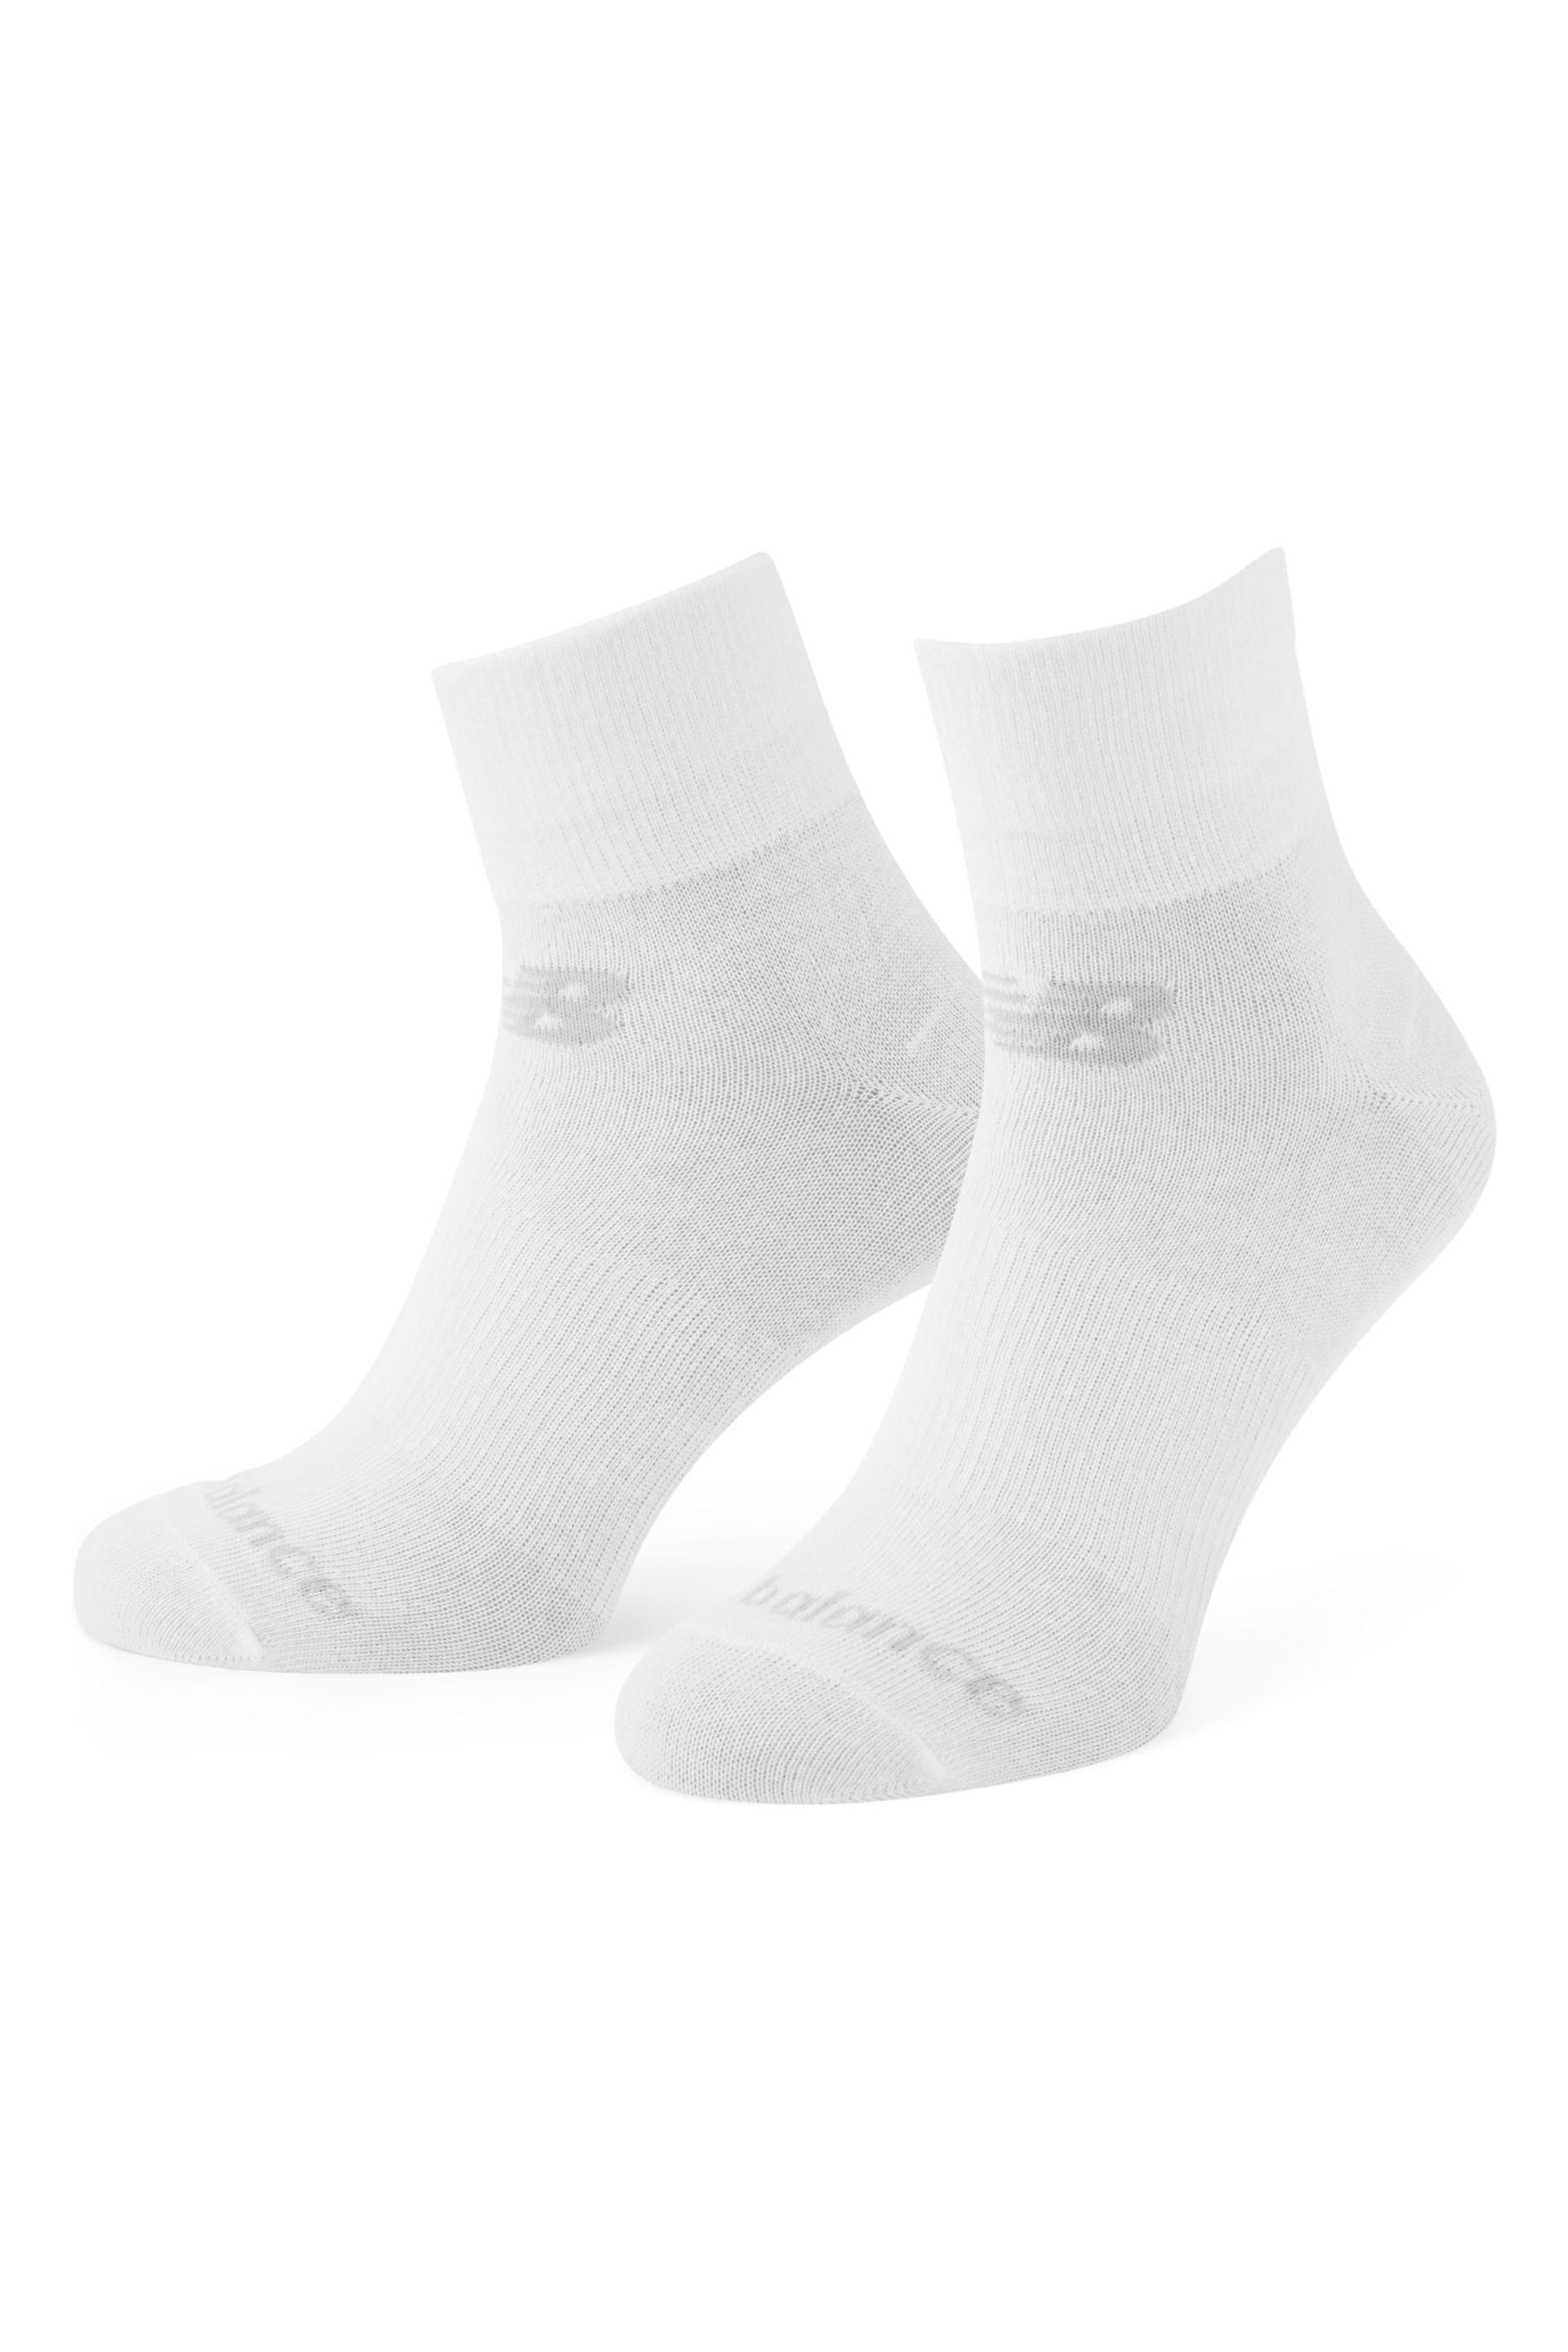 New Balance White Multipack Ankle Flat Socks - Image 2 of 3